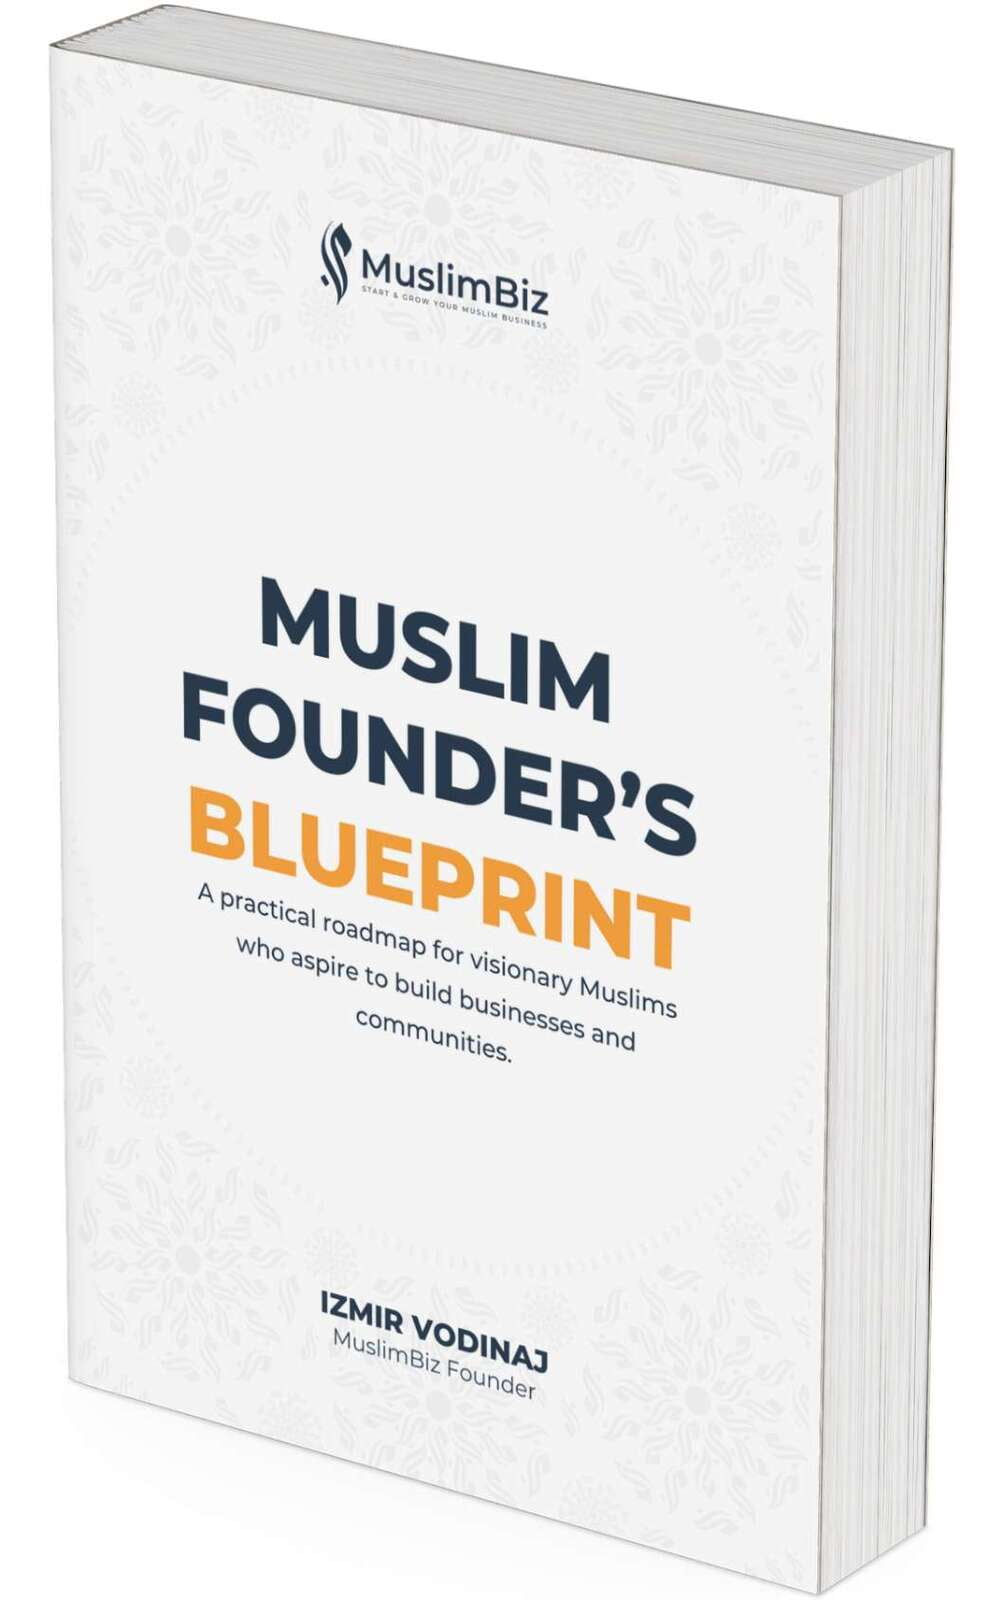 A book cover: Muslim Founder's Blueprint